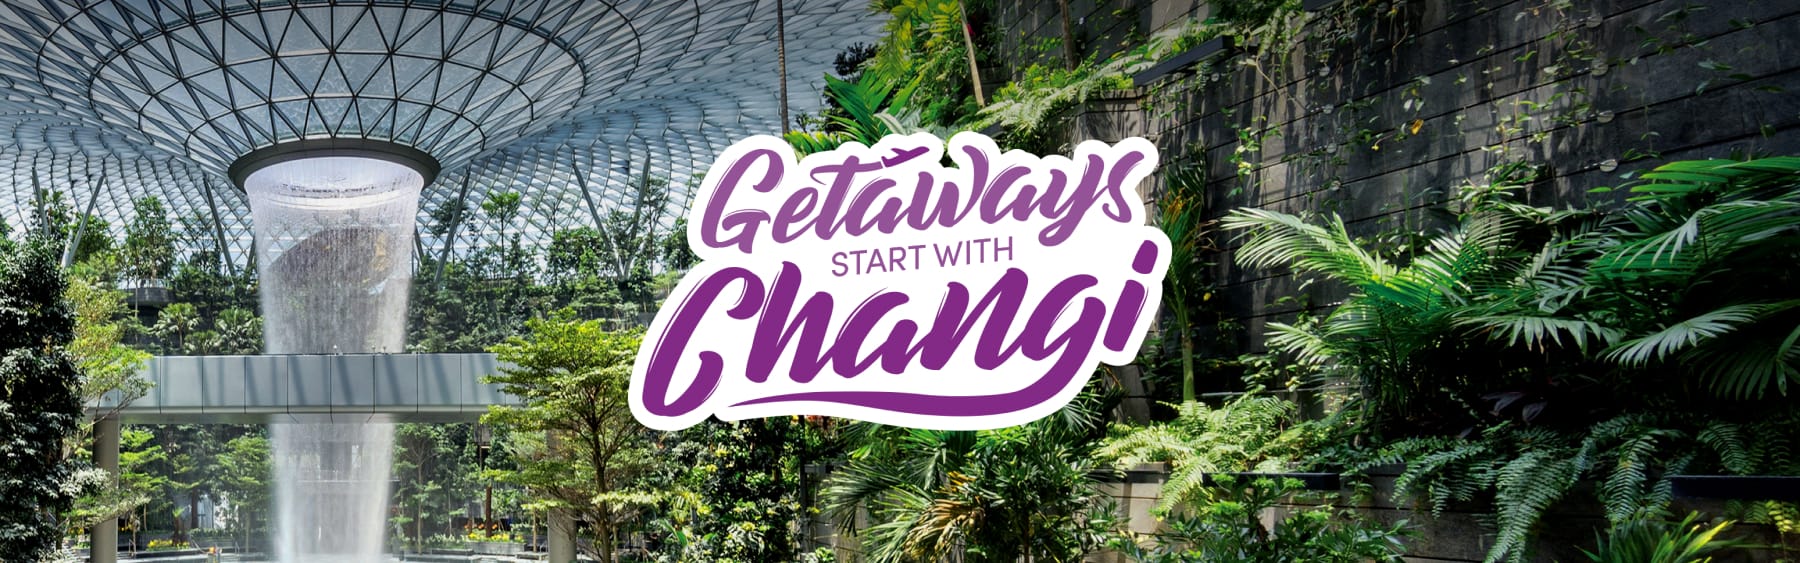 Getaways Start with Changi Masthead